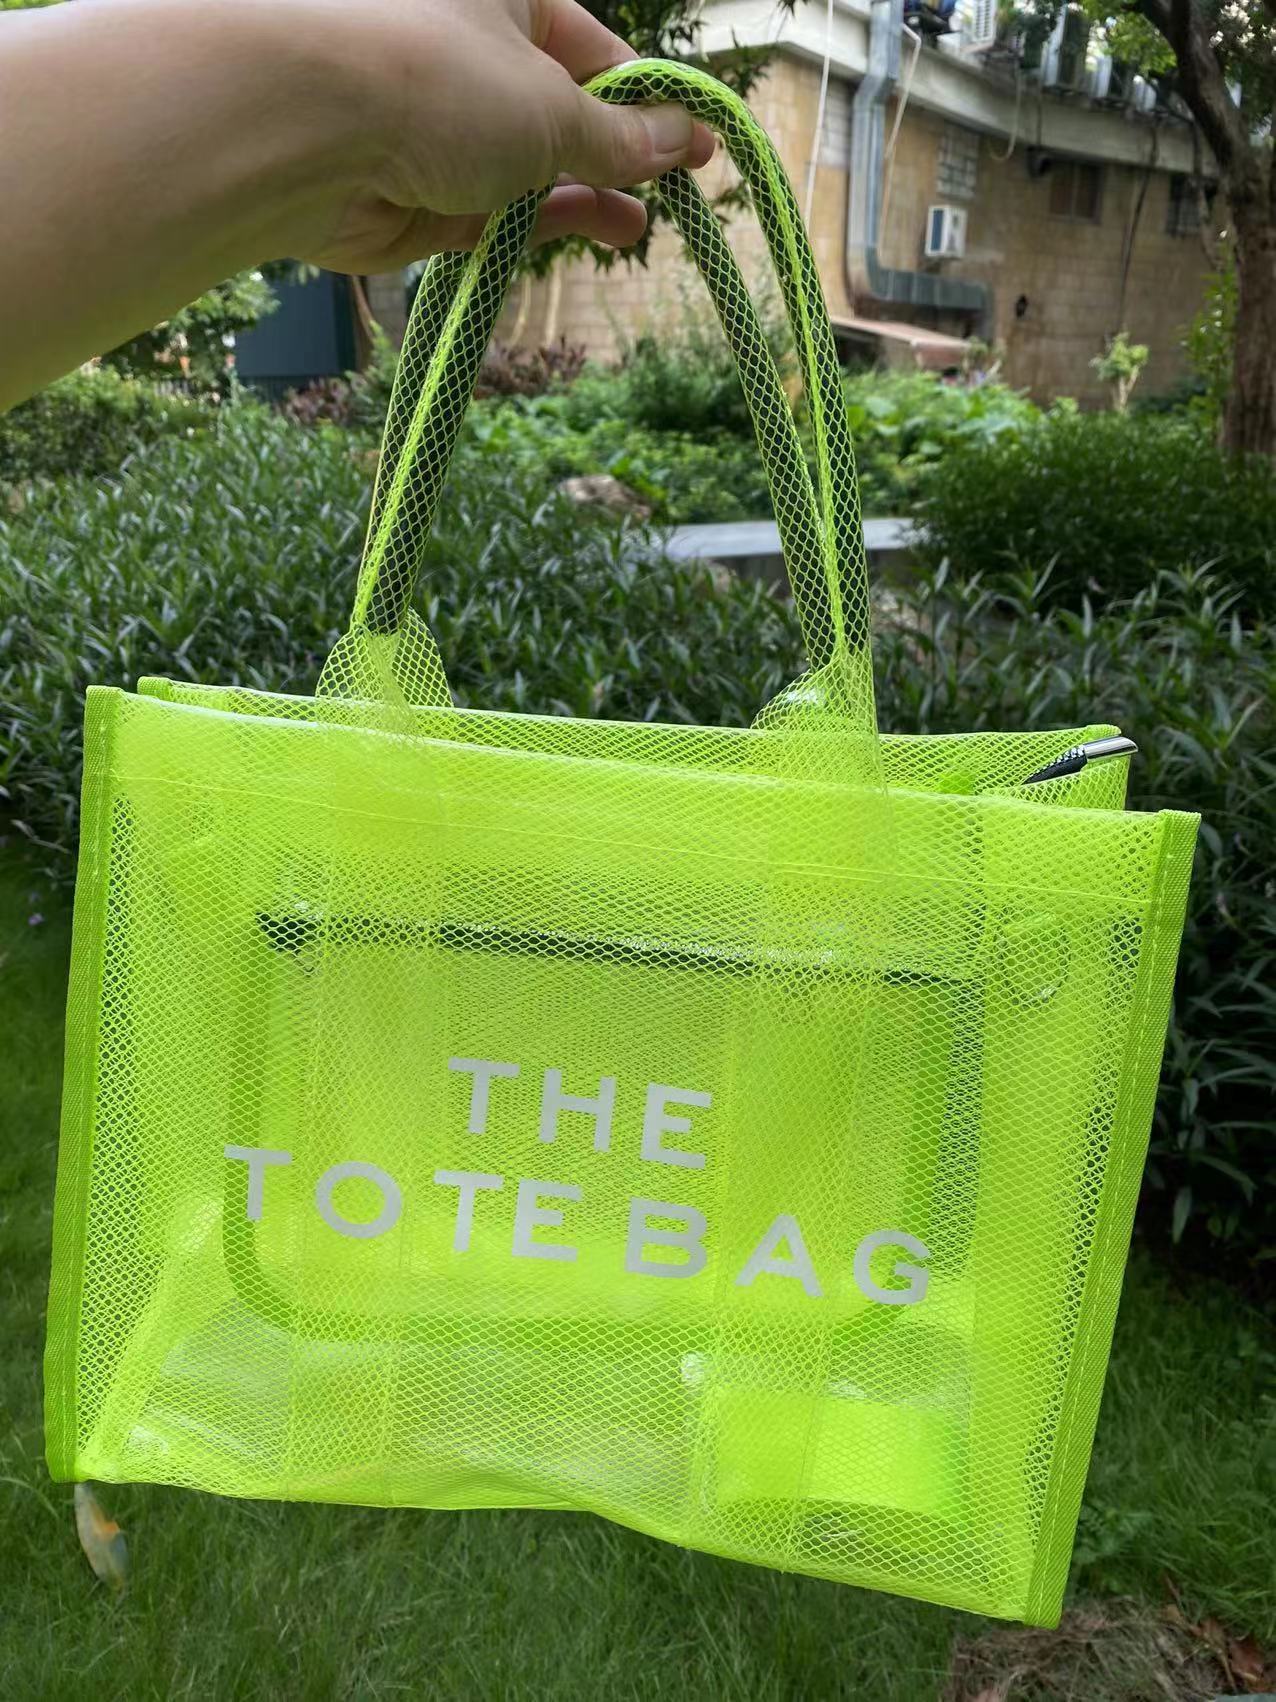 The Tote Bag Women's Hand Bag Fashion Style Bag